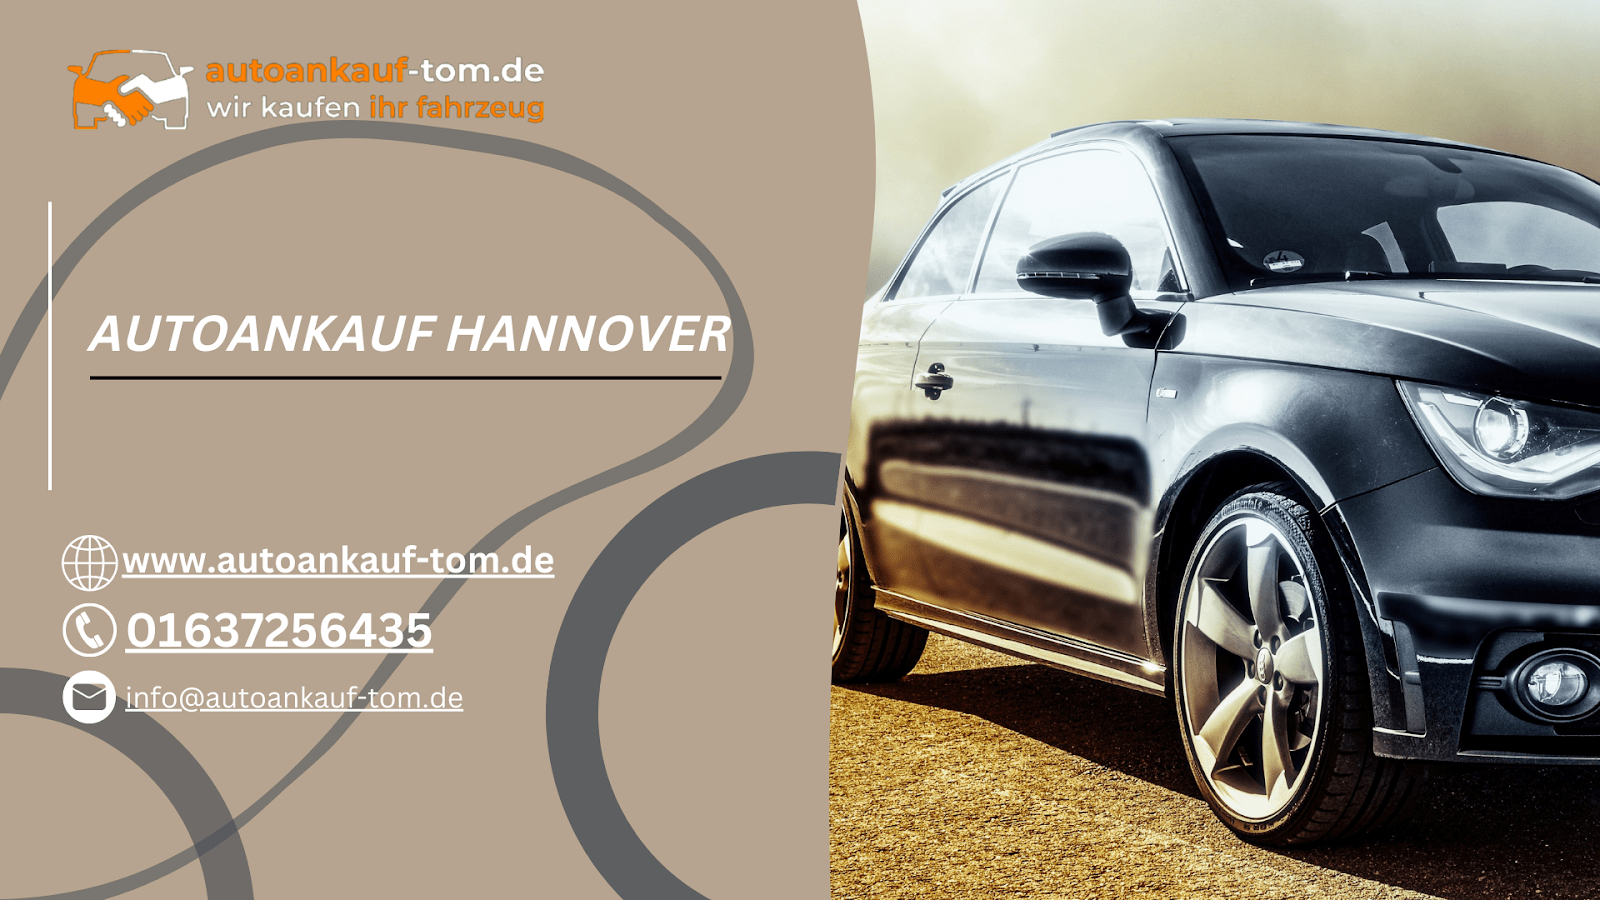 Autoankauf Hannover-Tom